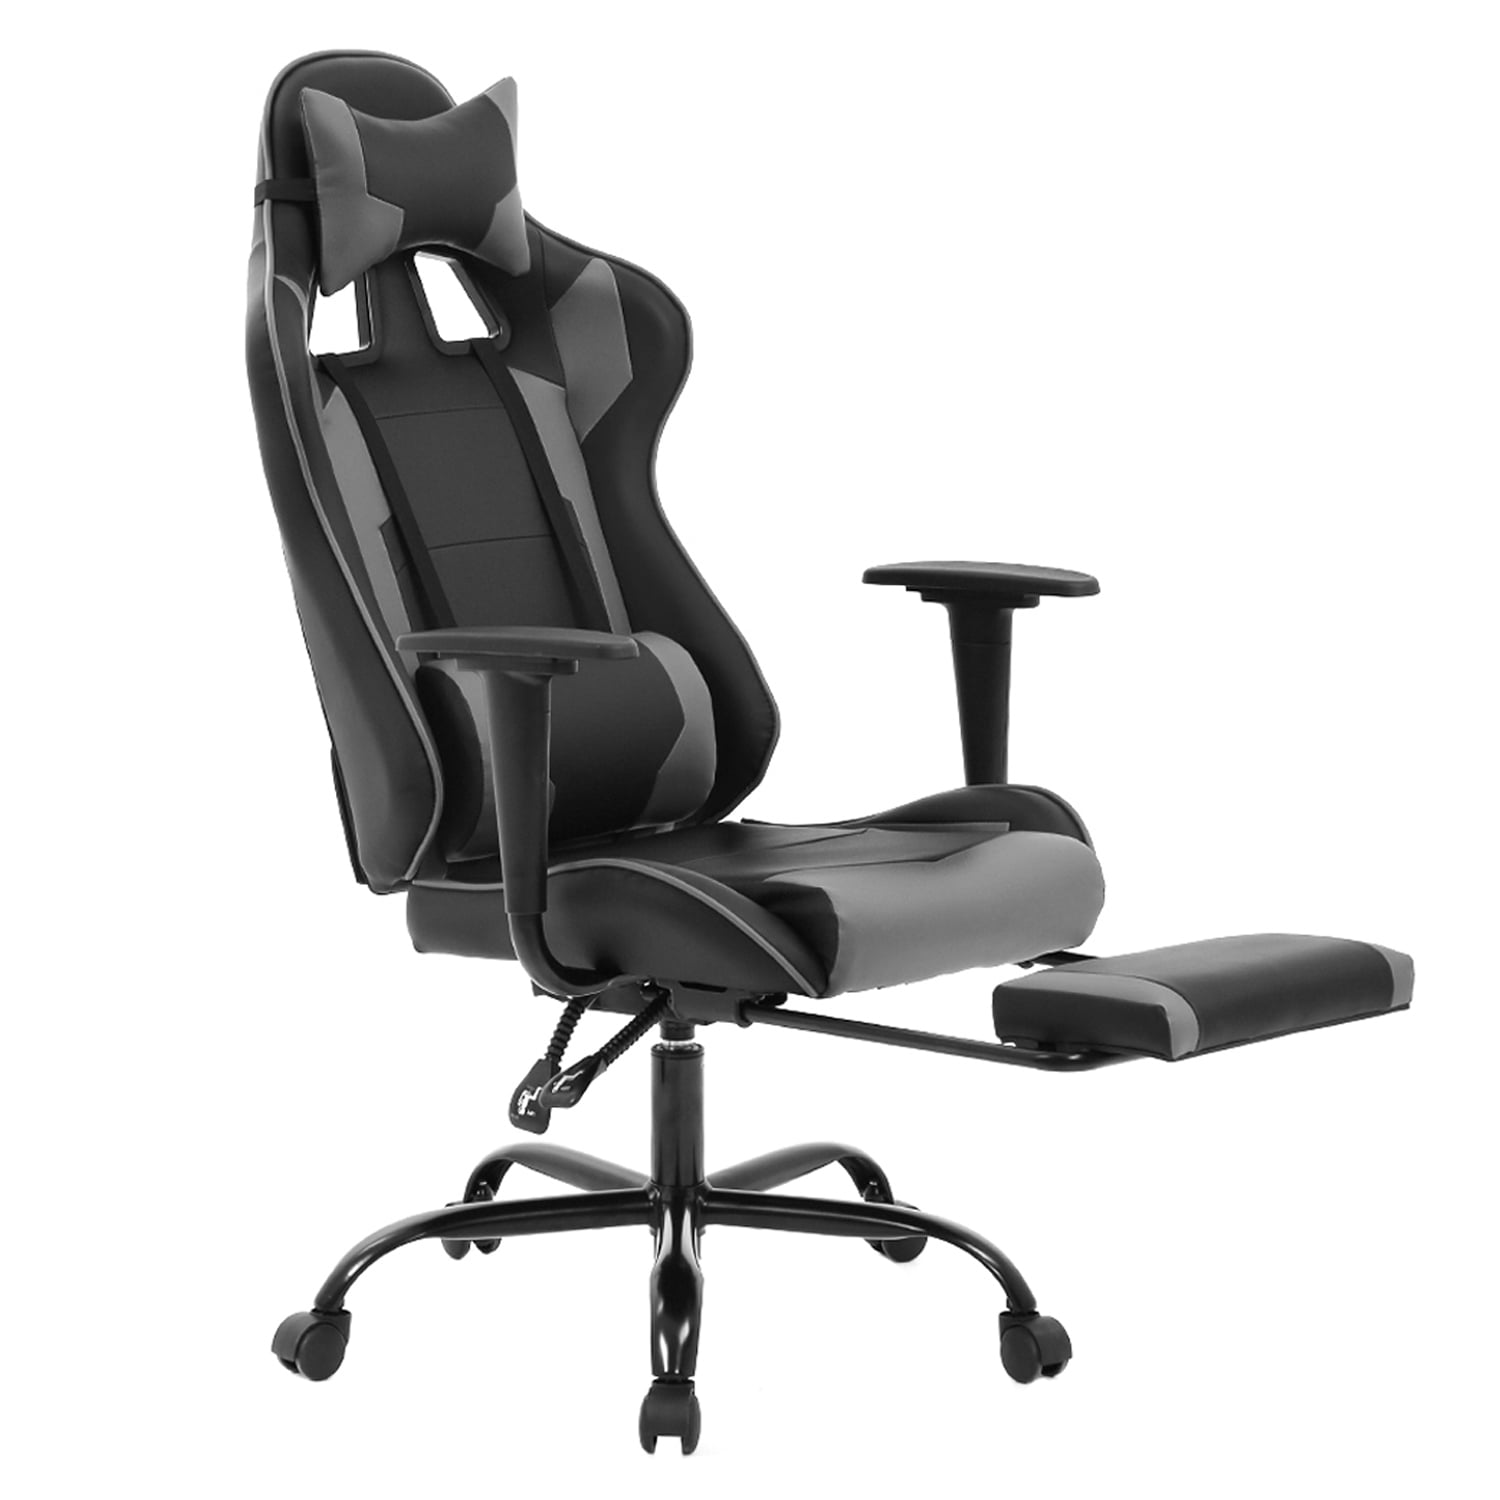 Grey Hironpal Gaming Racing Chair Office Computer Chair PU Leather Executive Ergonomic Adjustable Swivel Chair 